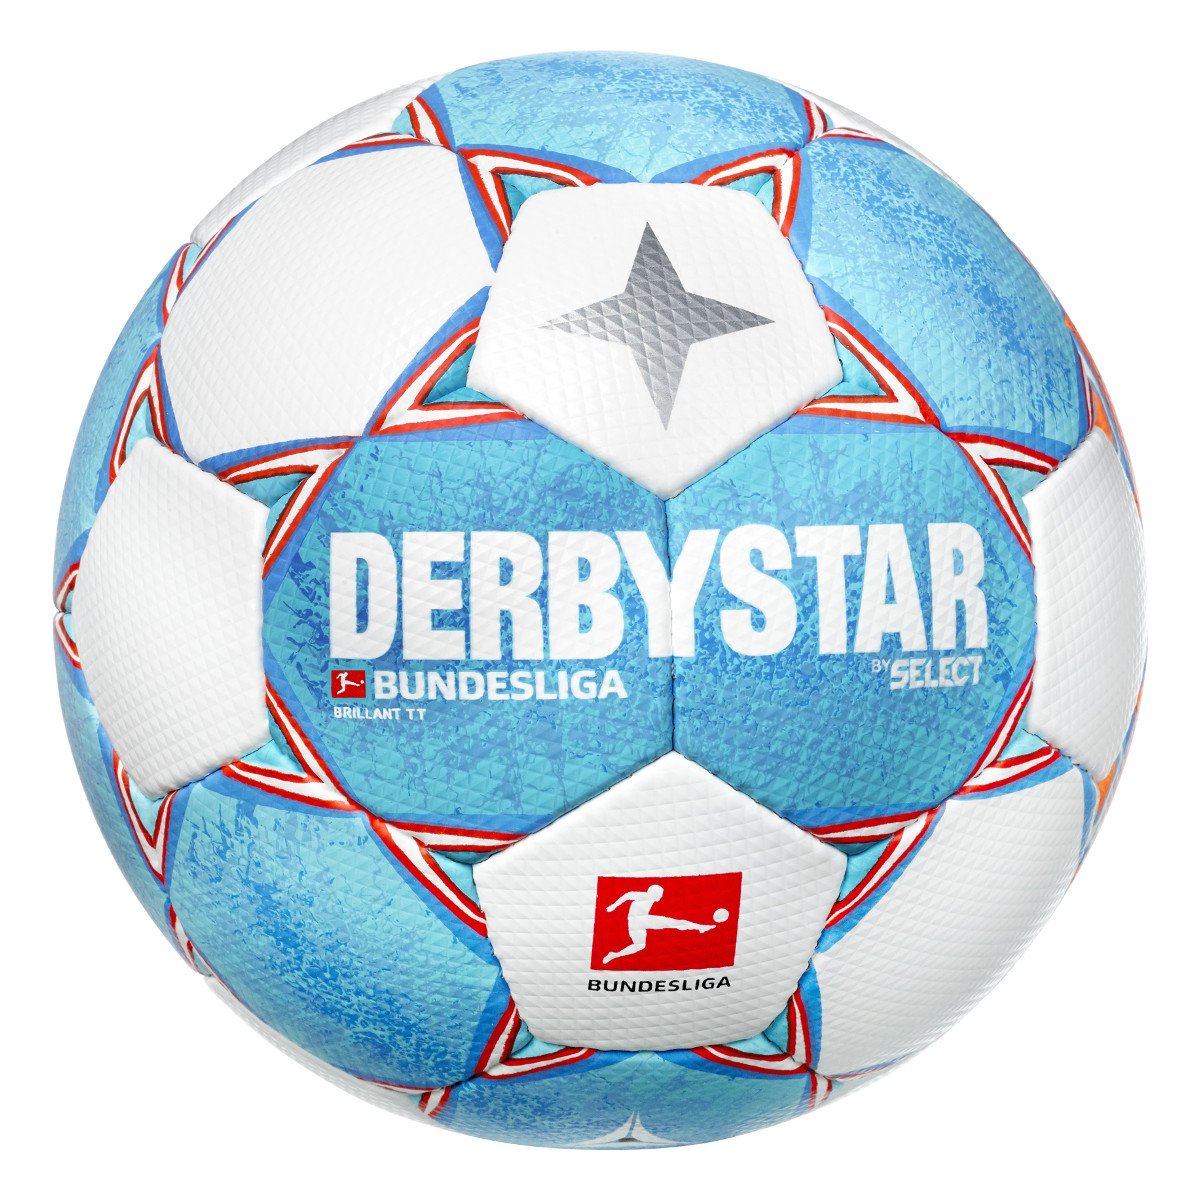 Bundesliga Derbystar Brillant weiß/orange/blau Fußball, TT v21